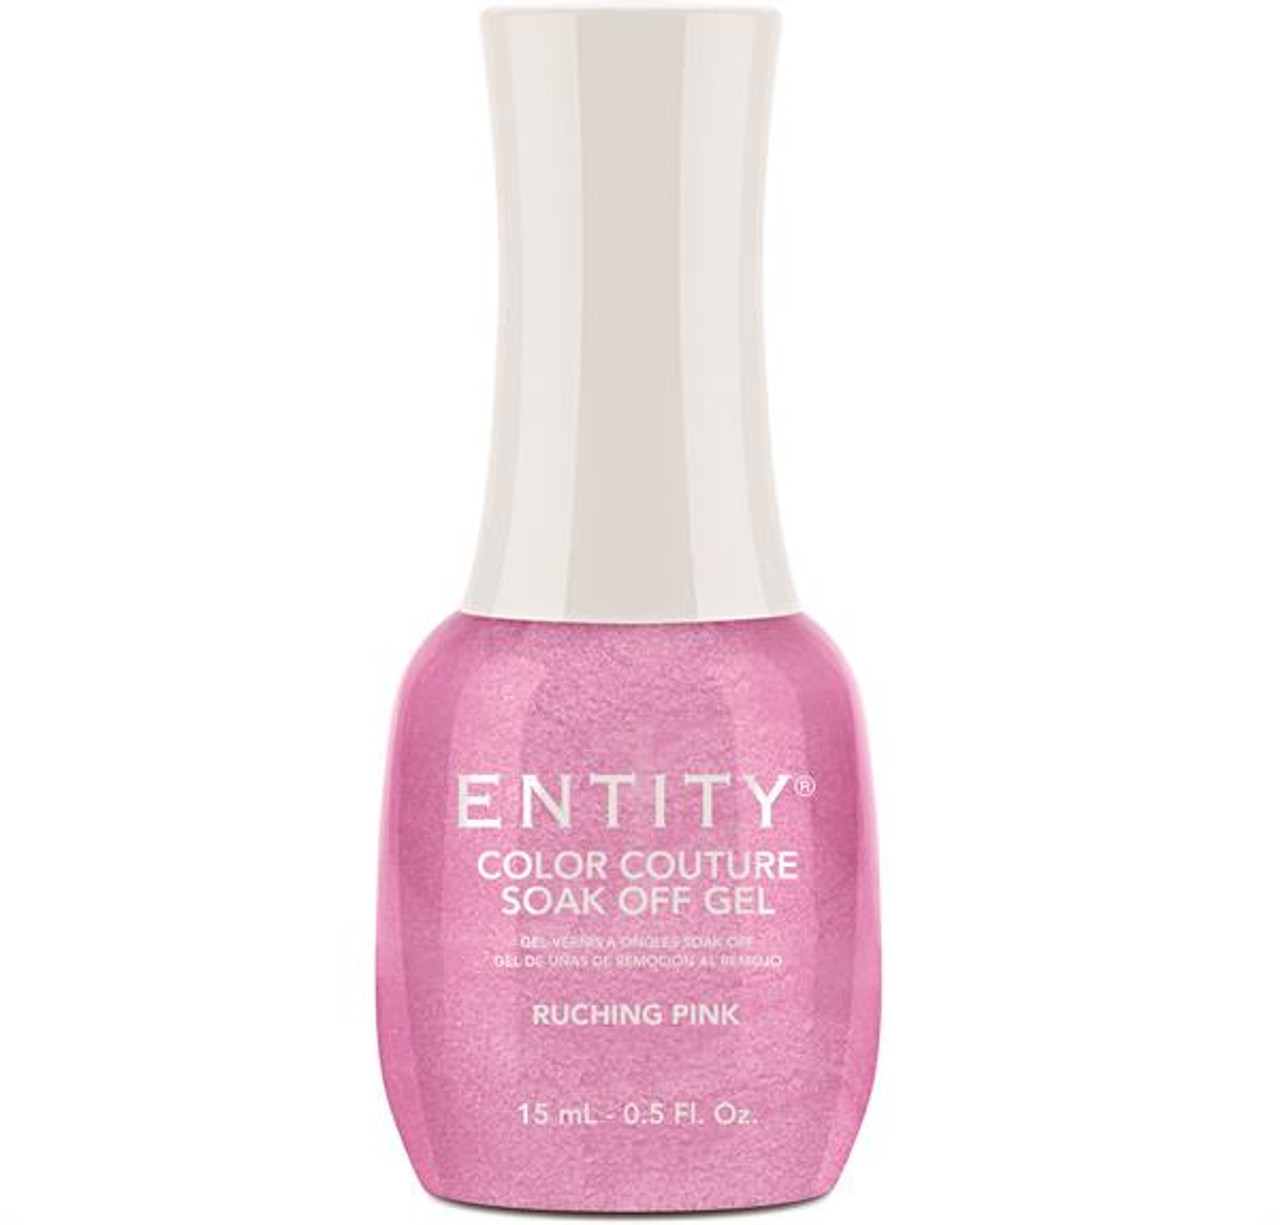 Entity Color Couture Soak Off Gel RUCHING PINK - 15 mL / .5 fl oz